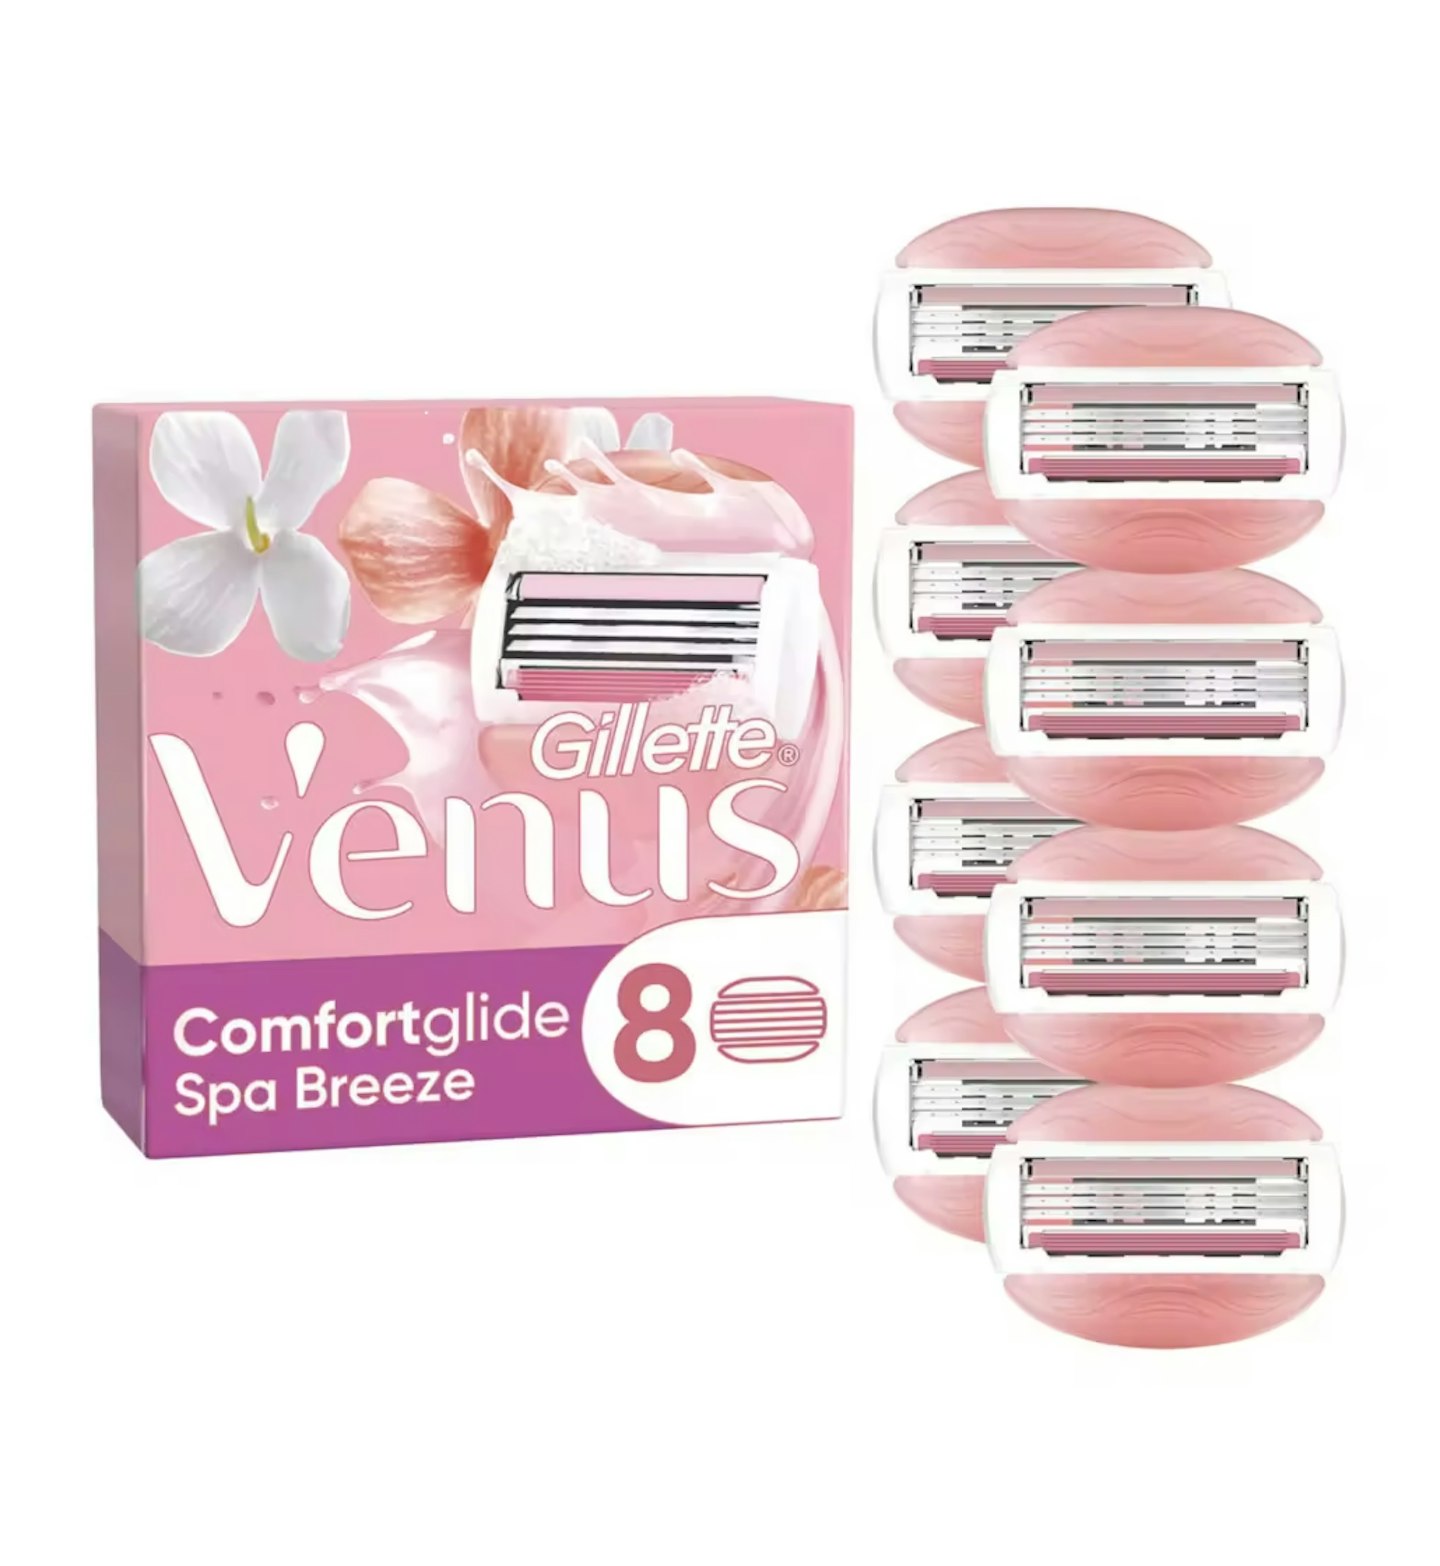 Venus Comfortglide Spa Breeze Razor Blades, 8 pack